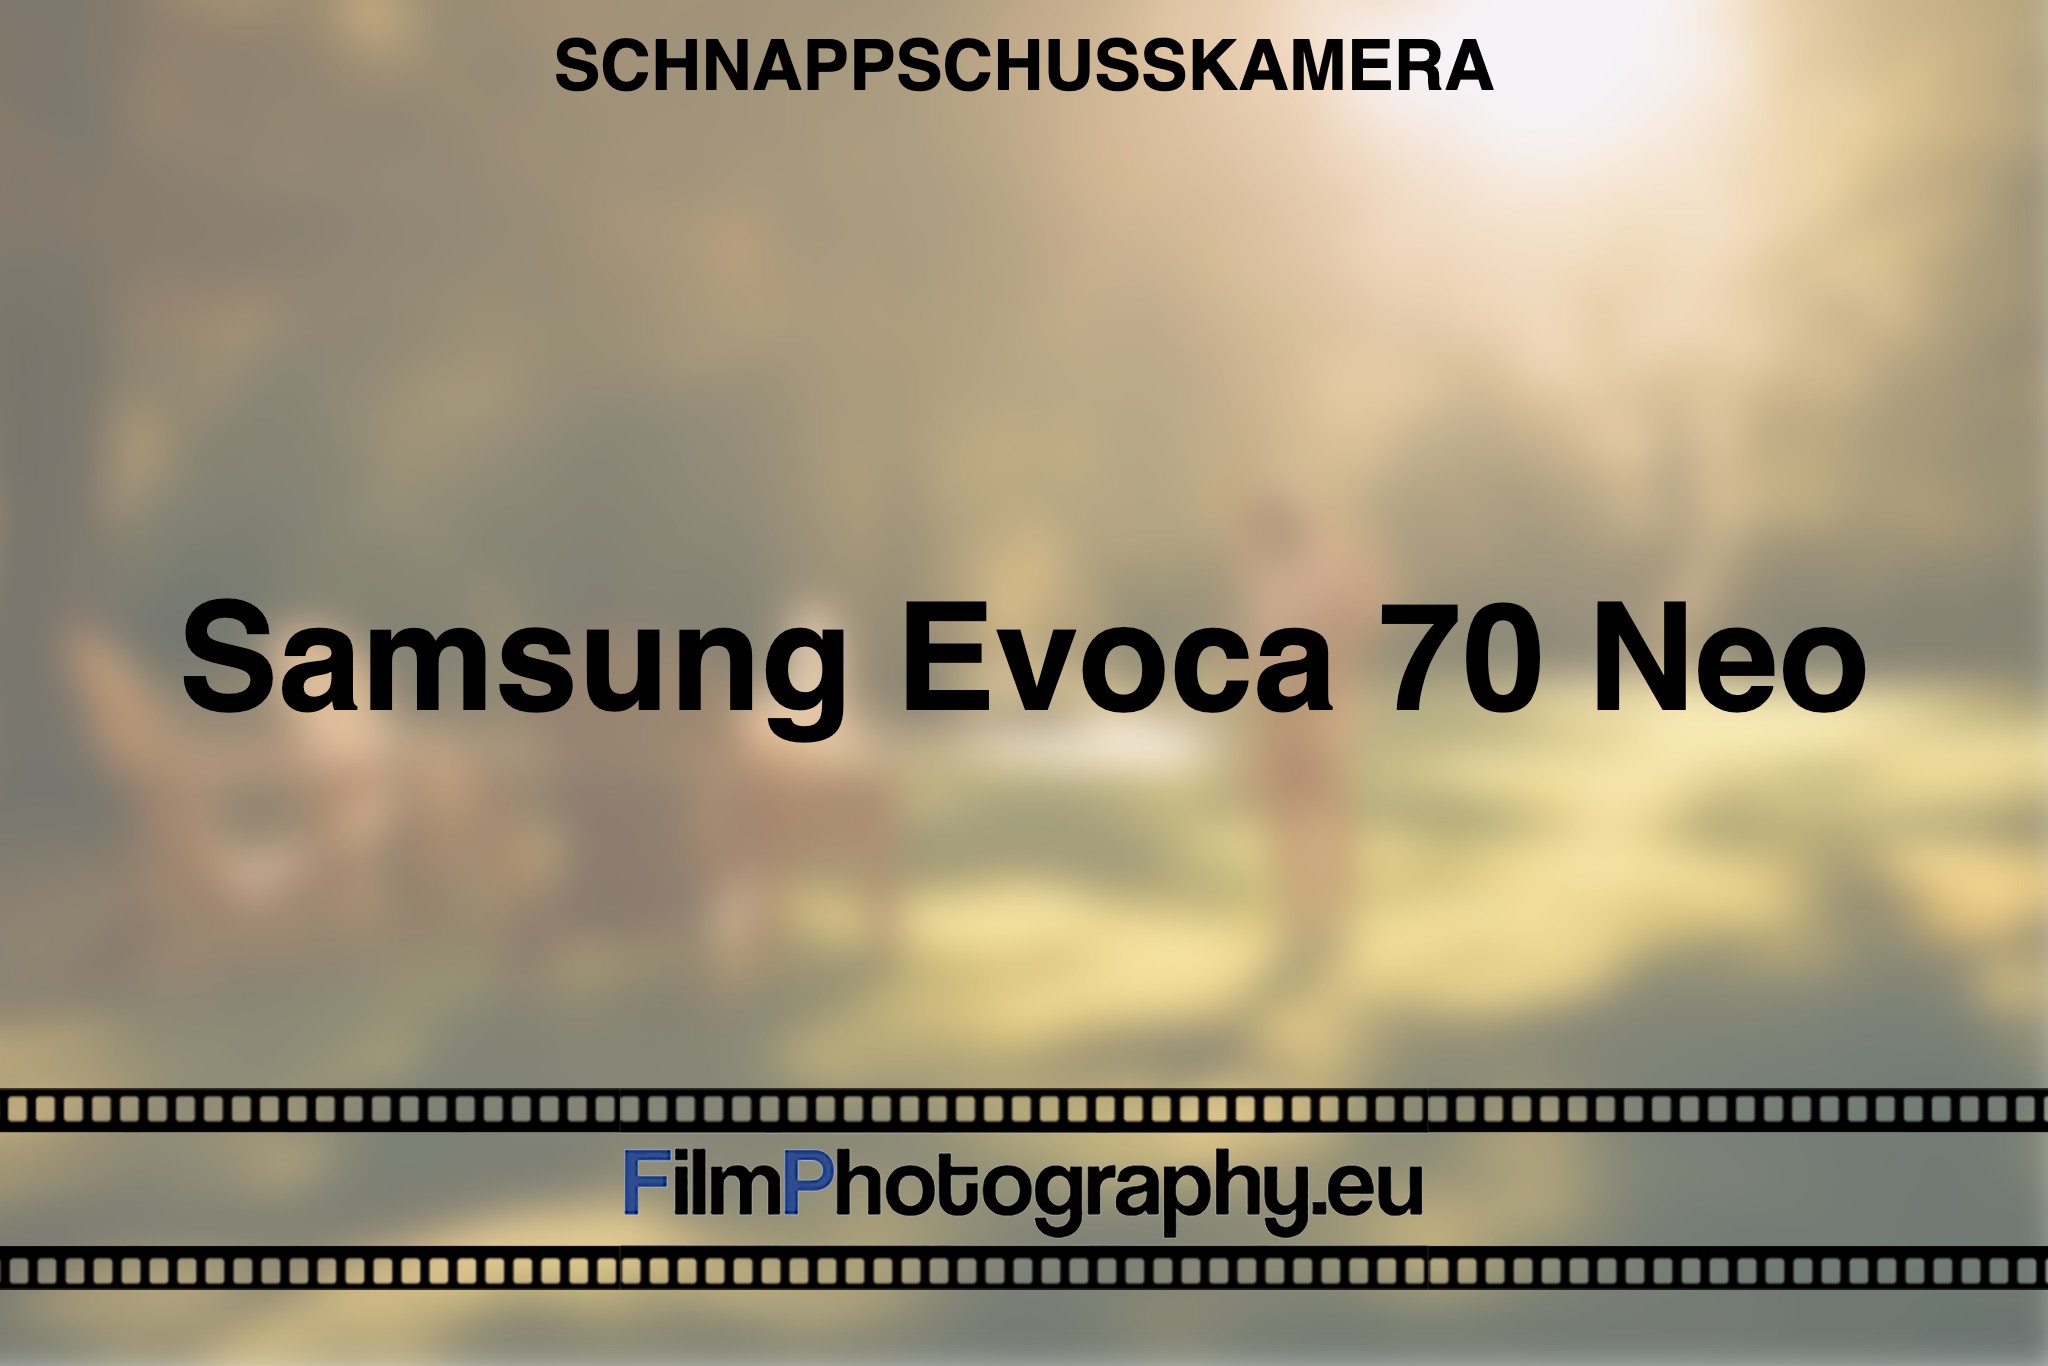 samsung-evoca-70-neo-schnappschusskamera-bnv